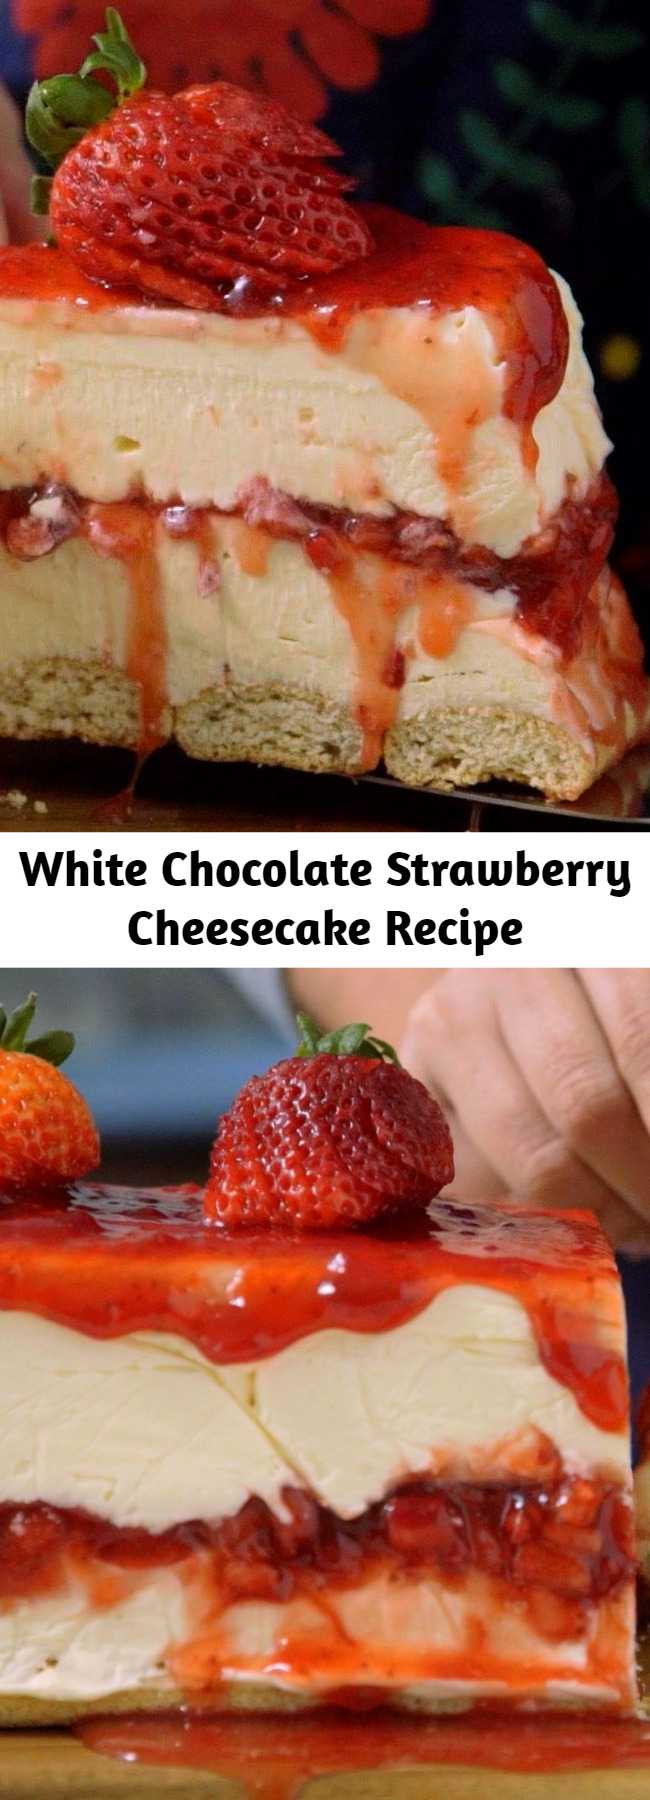 White Chocolate Strawberry Cheesecake Recipe - Creamy white chocolate makes a classic strawberry dessert even more irresistible.